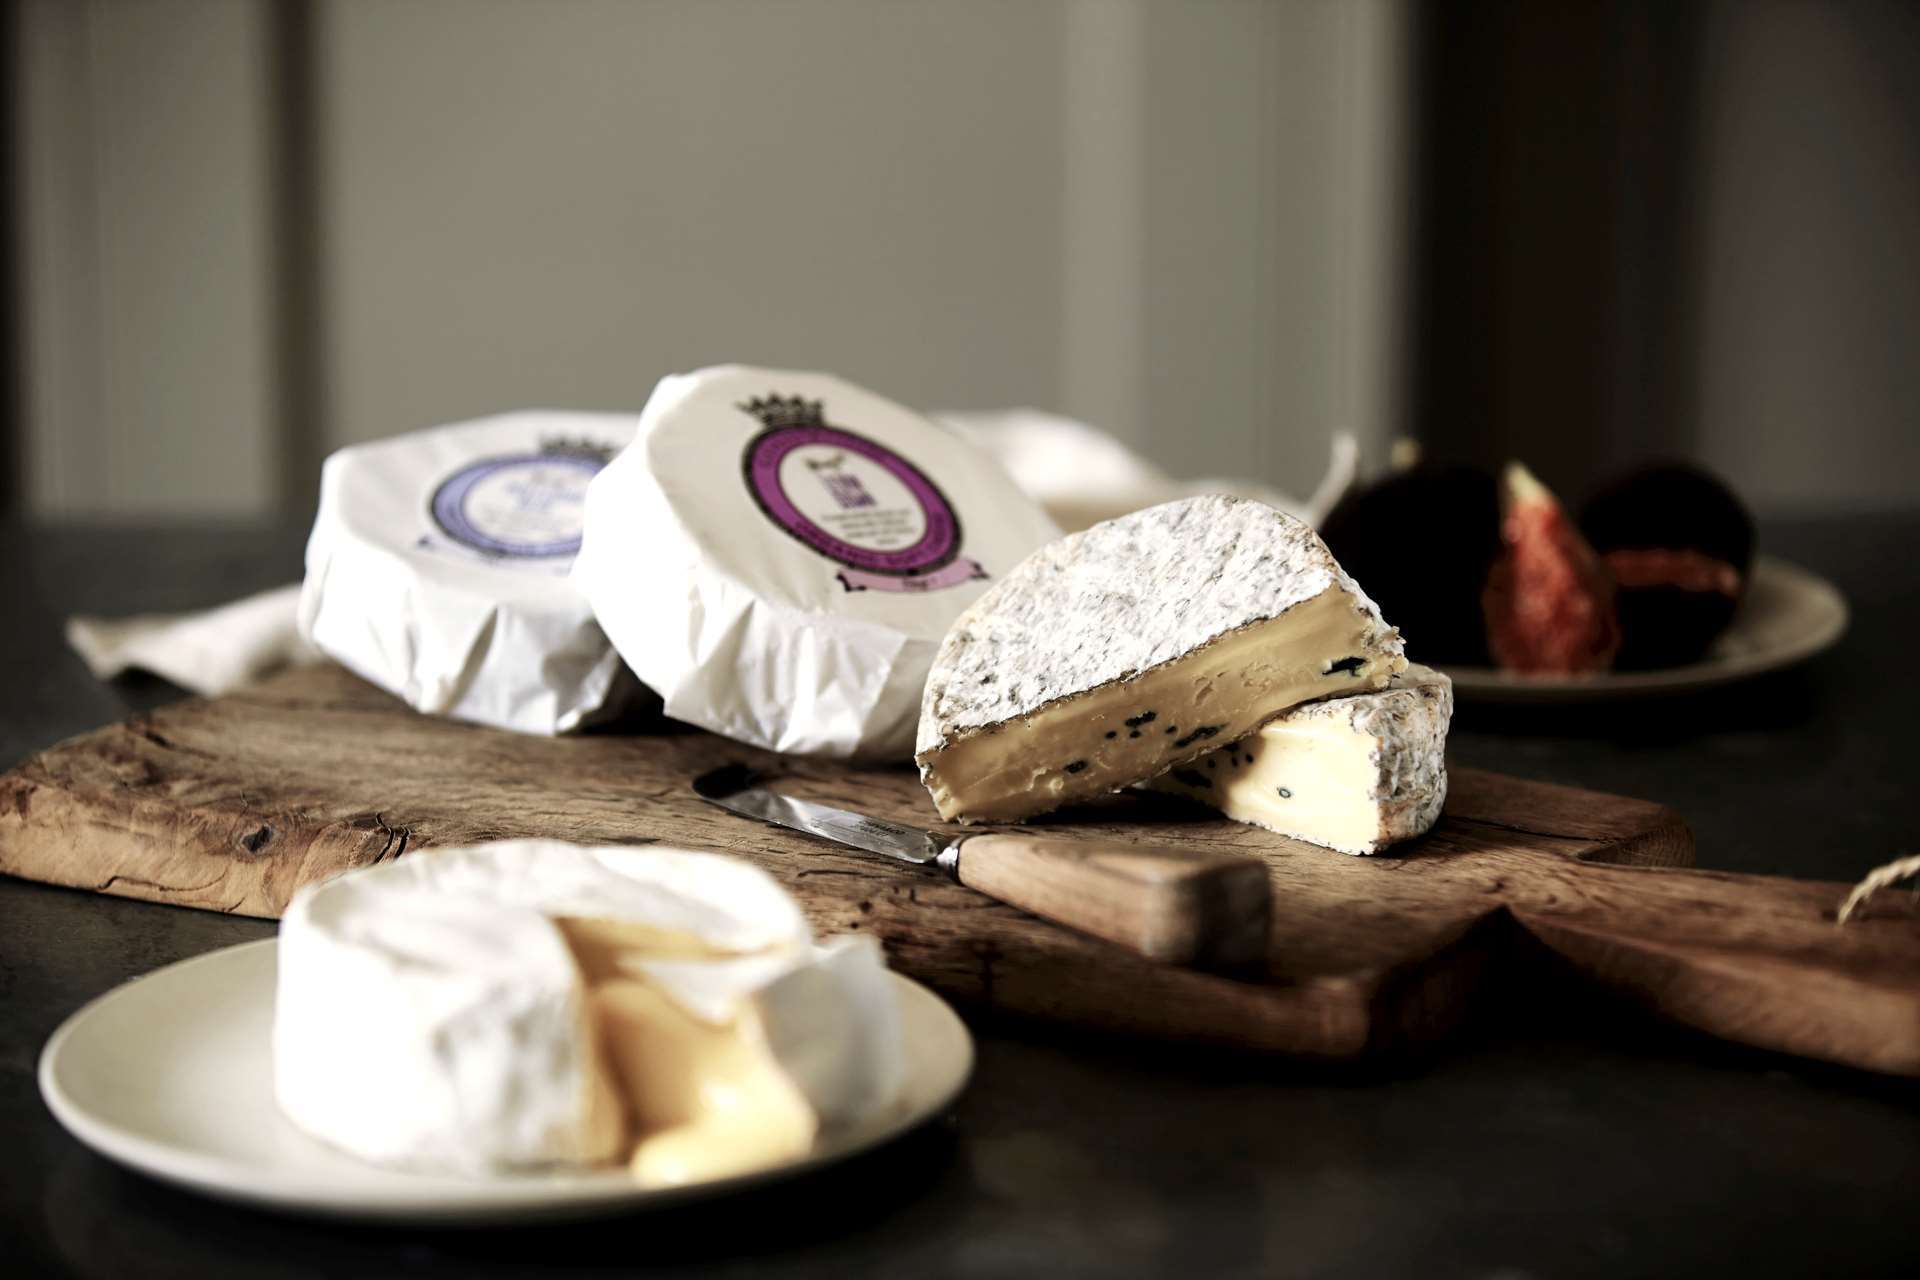 goodwood-organic-cheese-by-stephen-hayward007.jpg